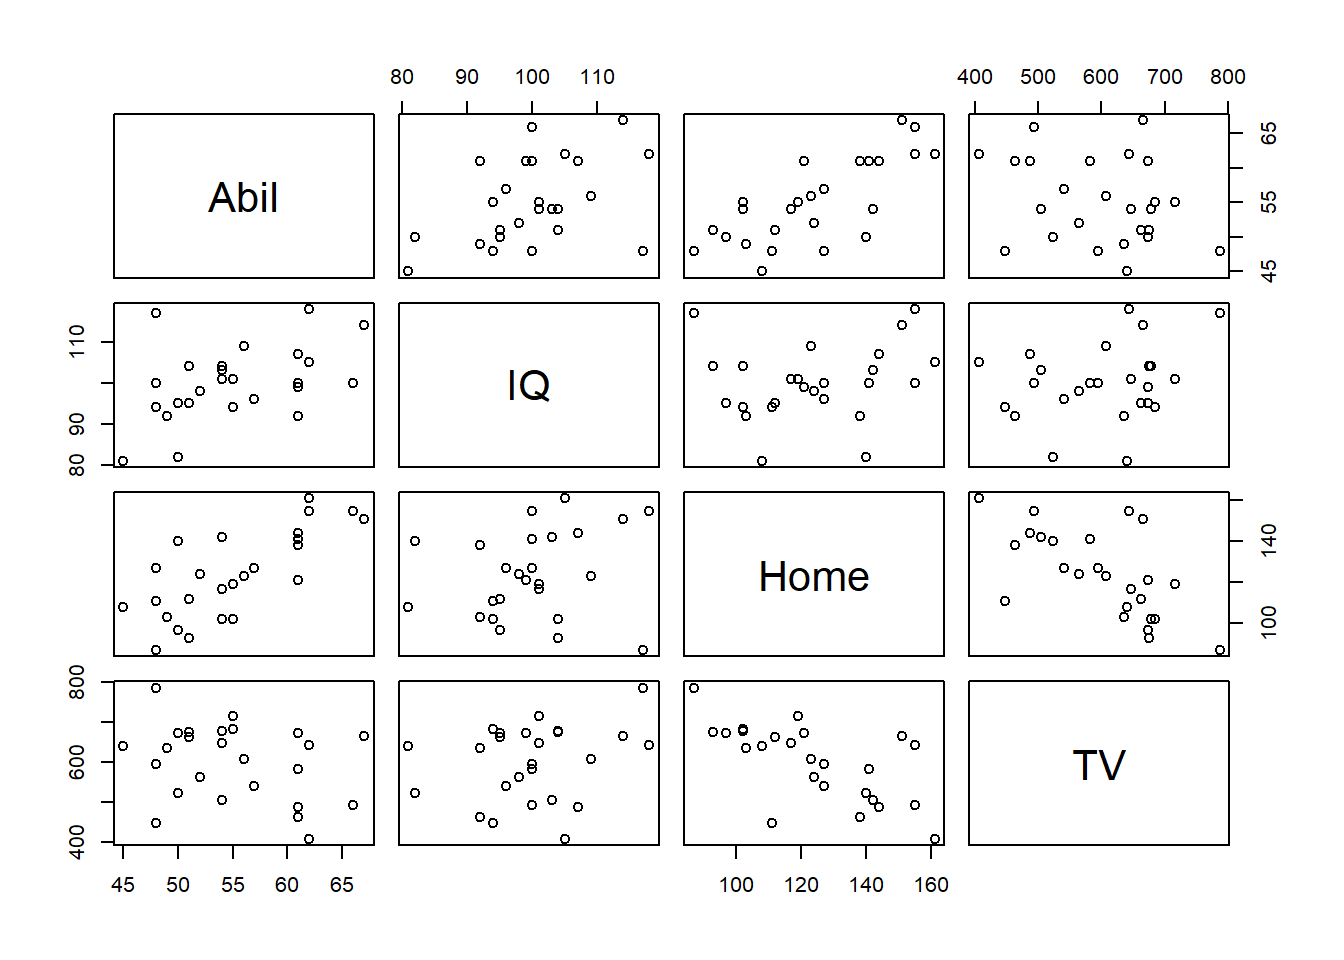 Matrix of Correlation plots of Miller and Haden (2013) data